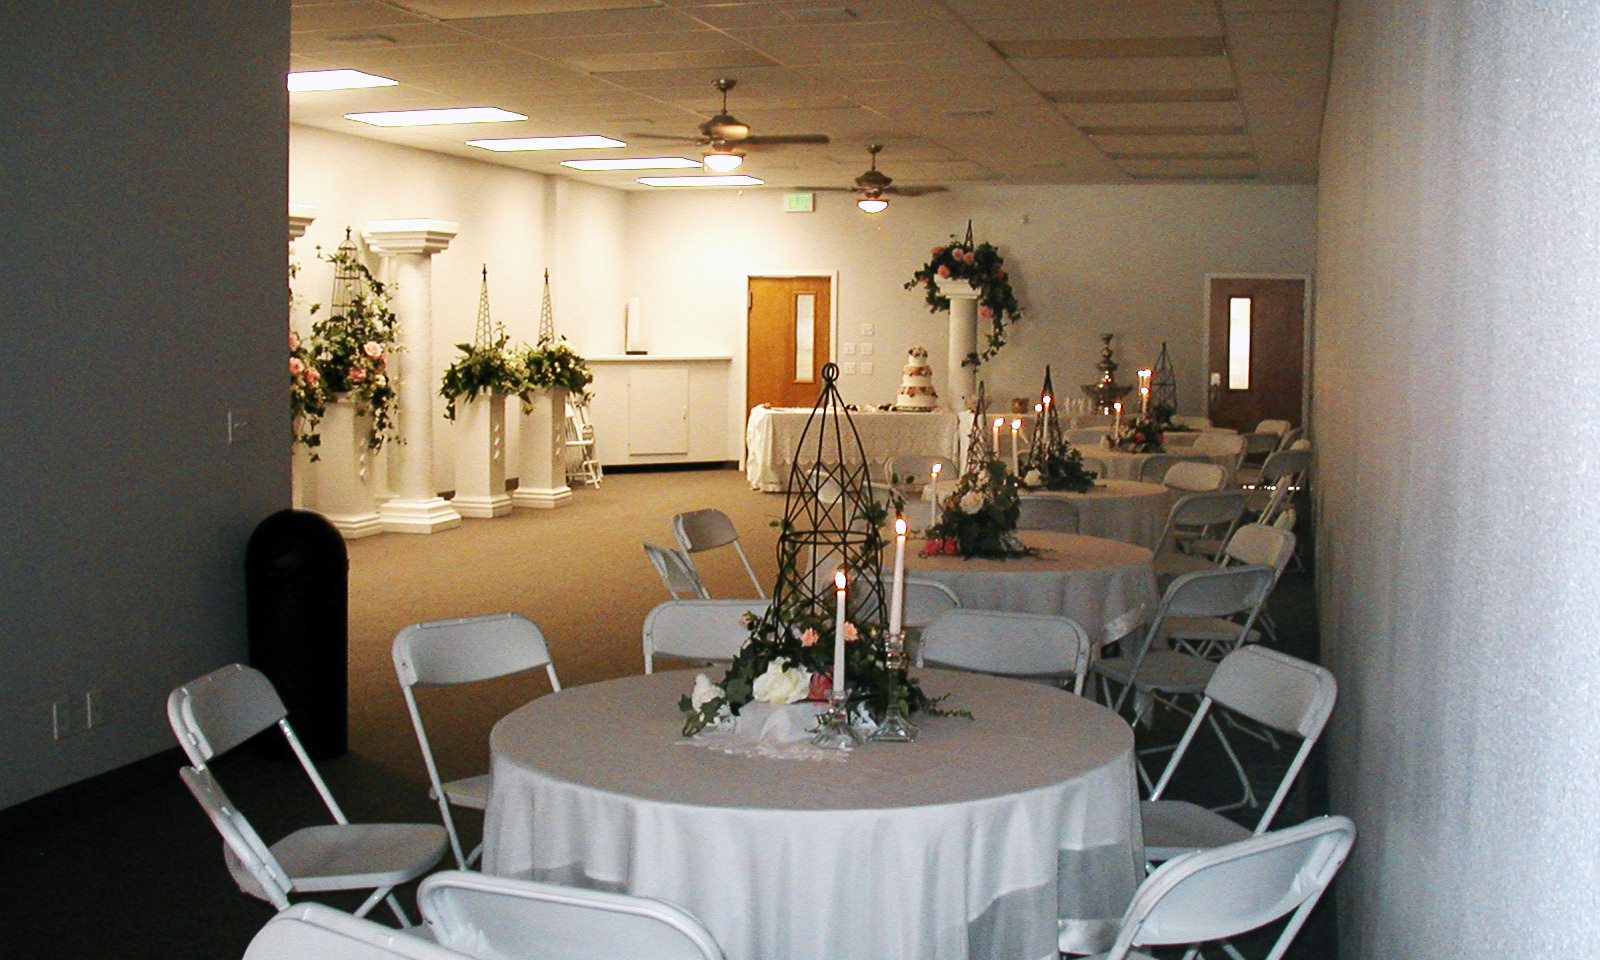 The Dille Event Center Wedding Reception Setup